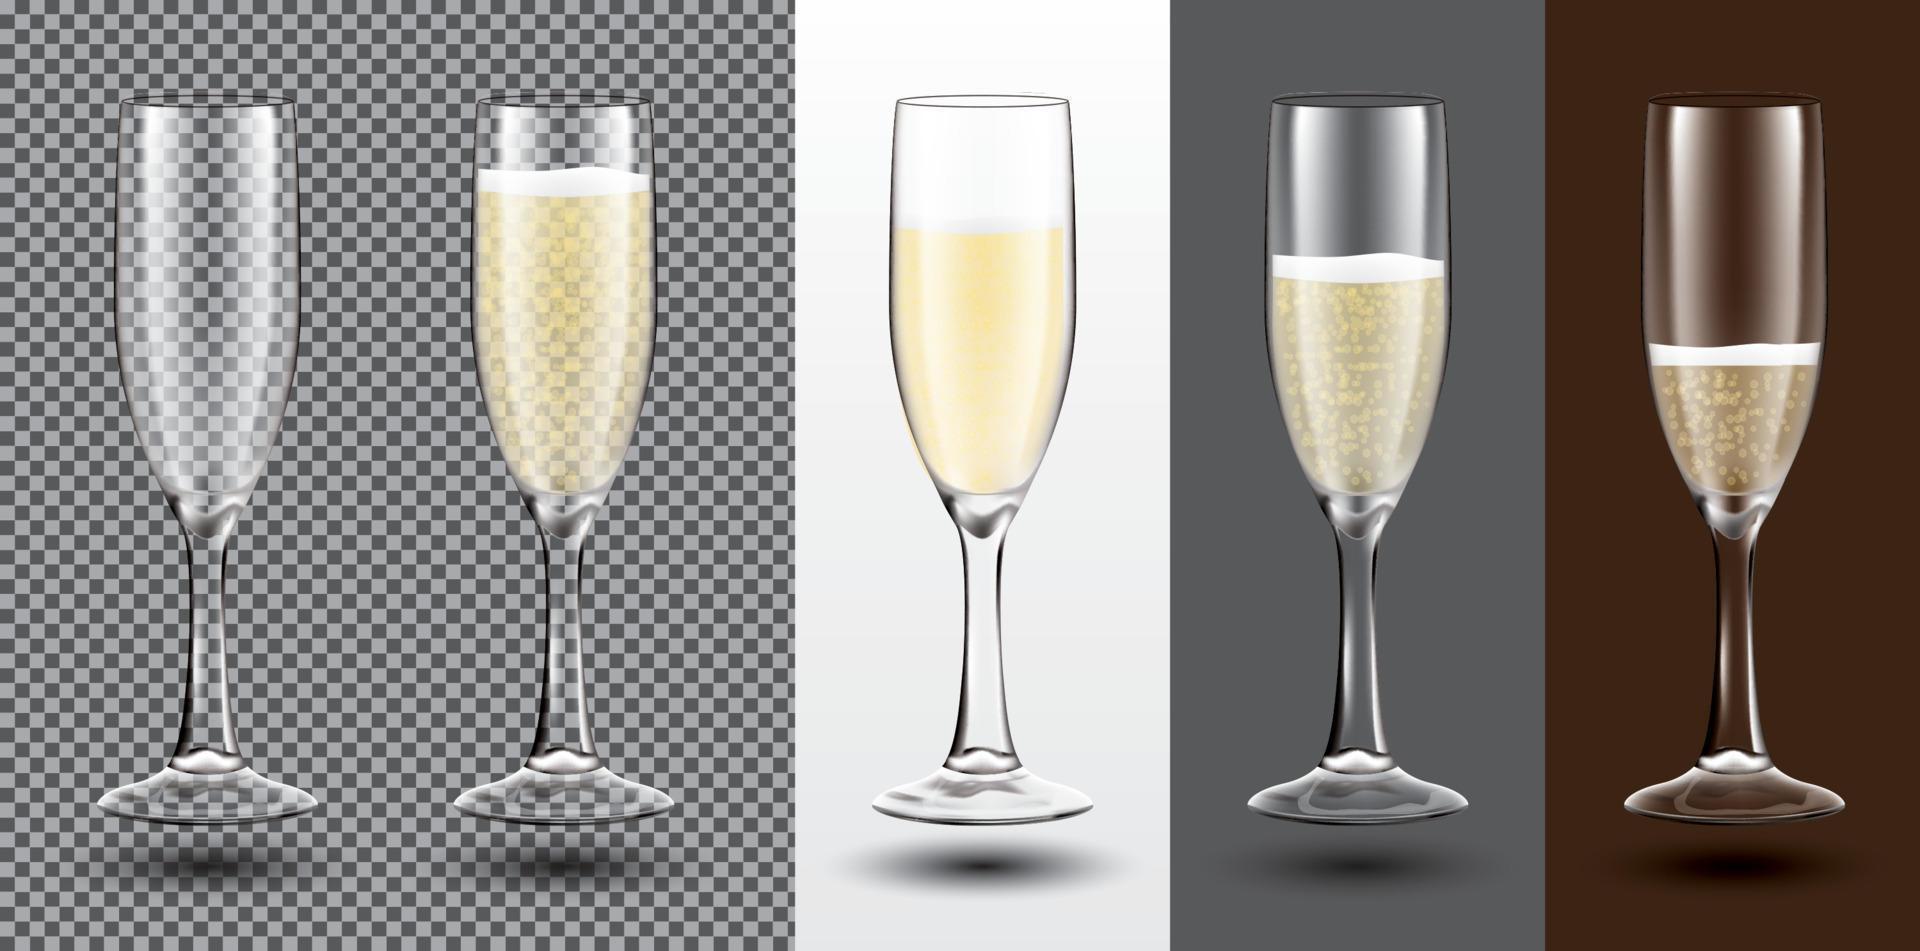 champagne glas uppsättning på annorlunda bakgrunder. transparent. vektor illustration.